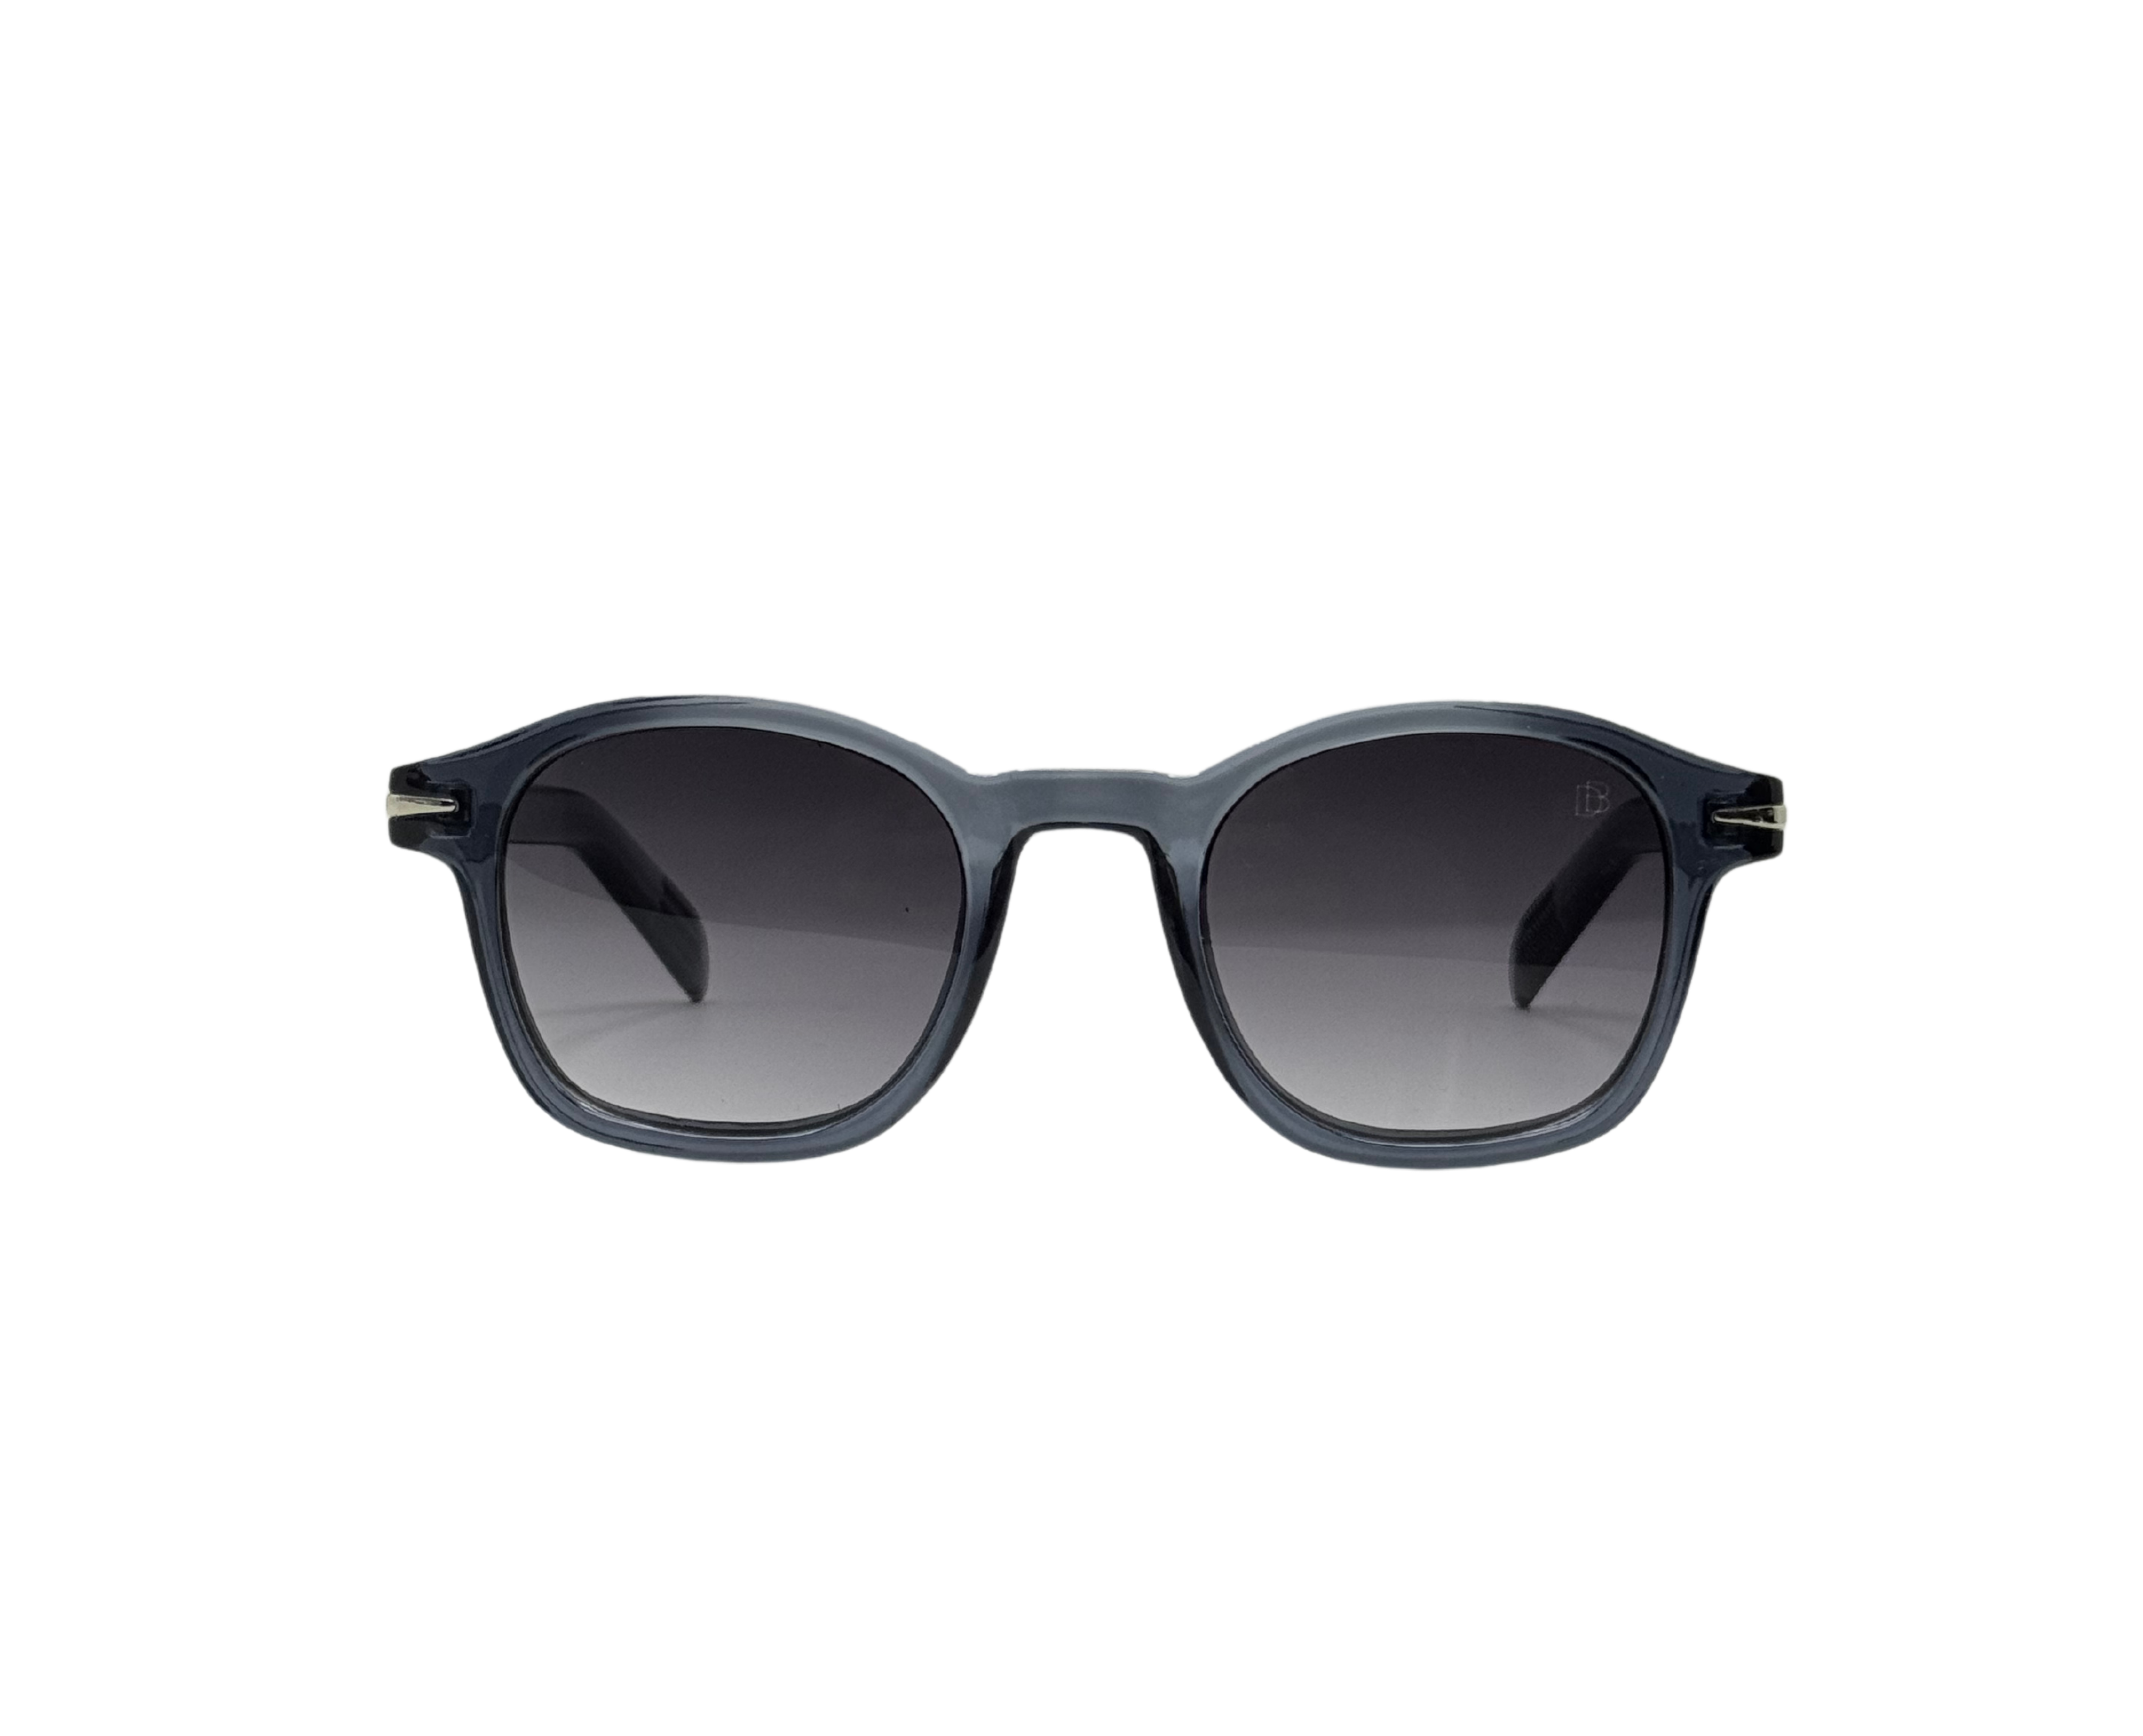 NS Deluxe - 2007 - Grey - Sunglasses